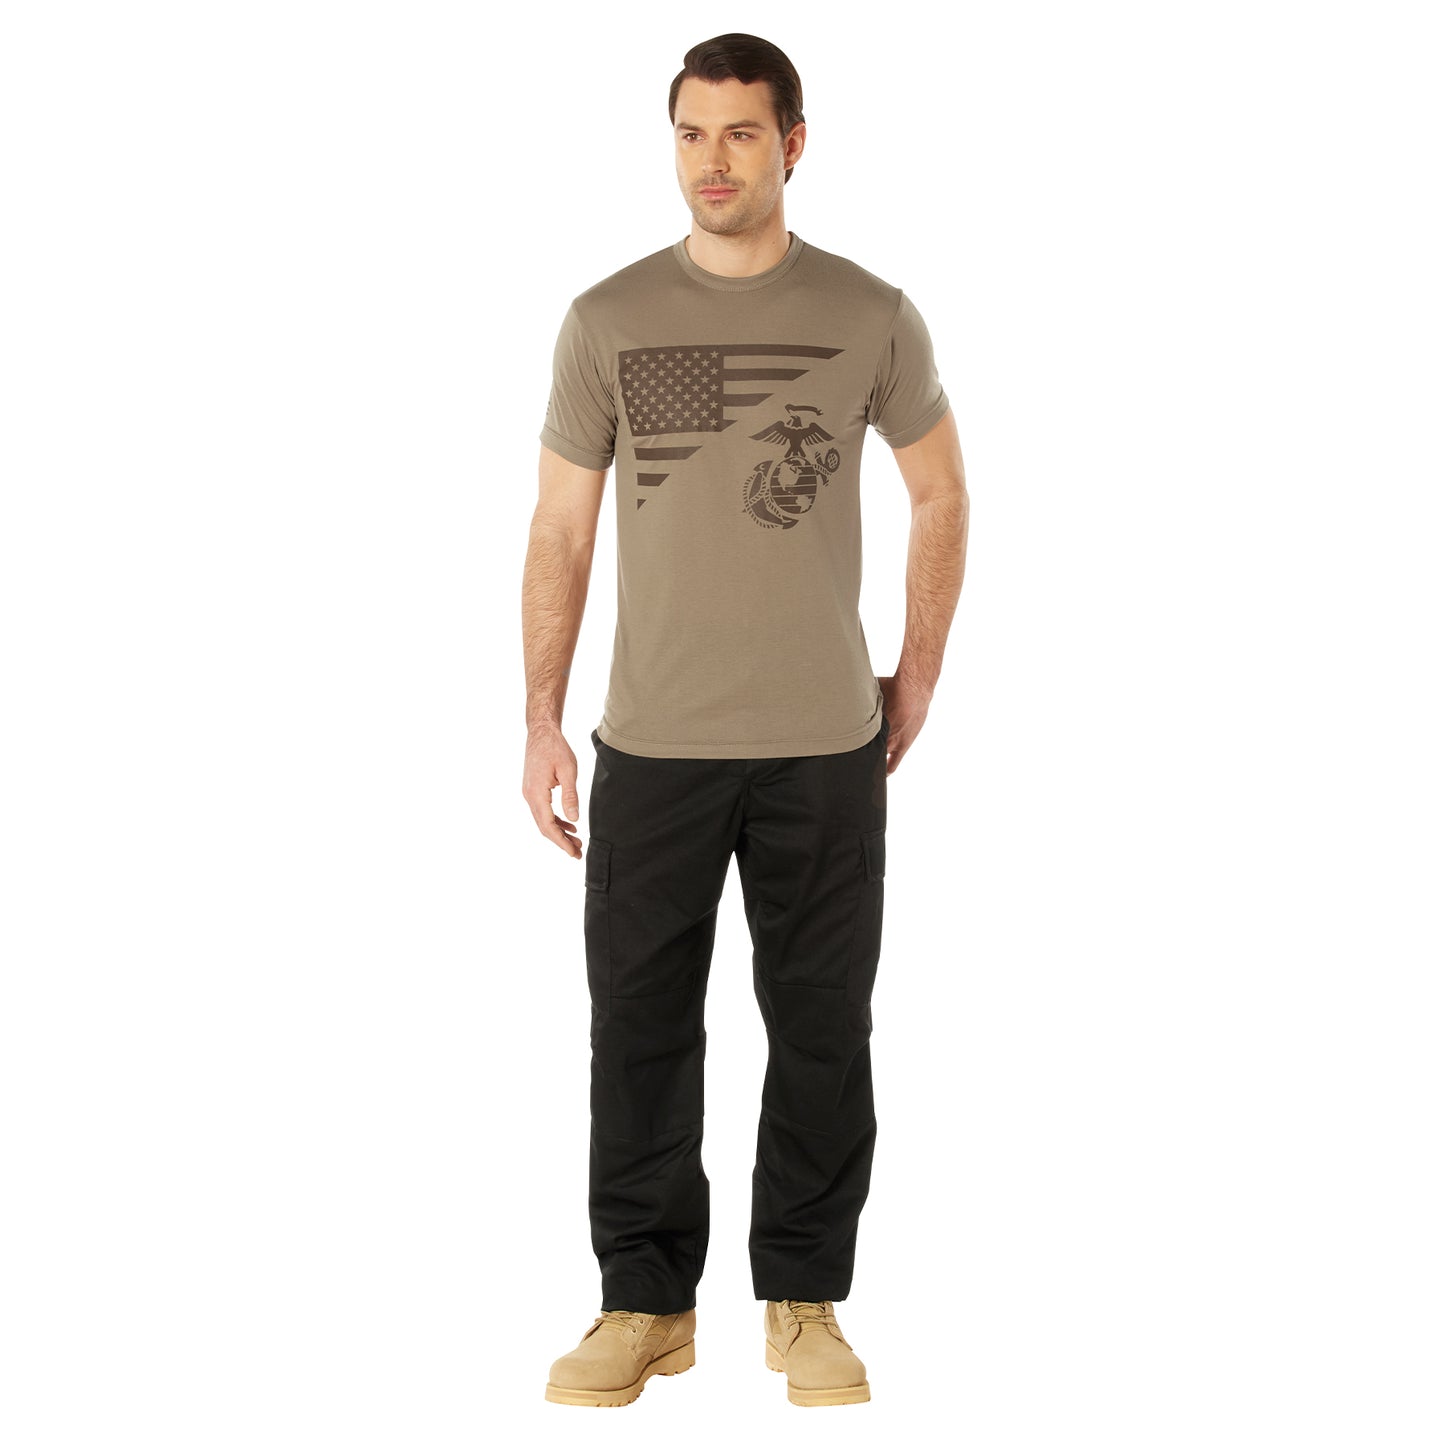 Rothco USMC Eagle, Globe, & Anchor Moisture Wicking T-Shirt - AR 670-1 Coyote Brown